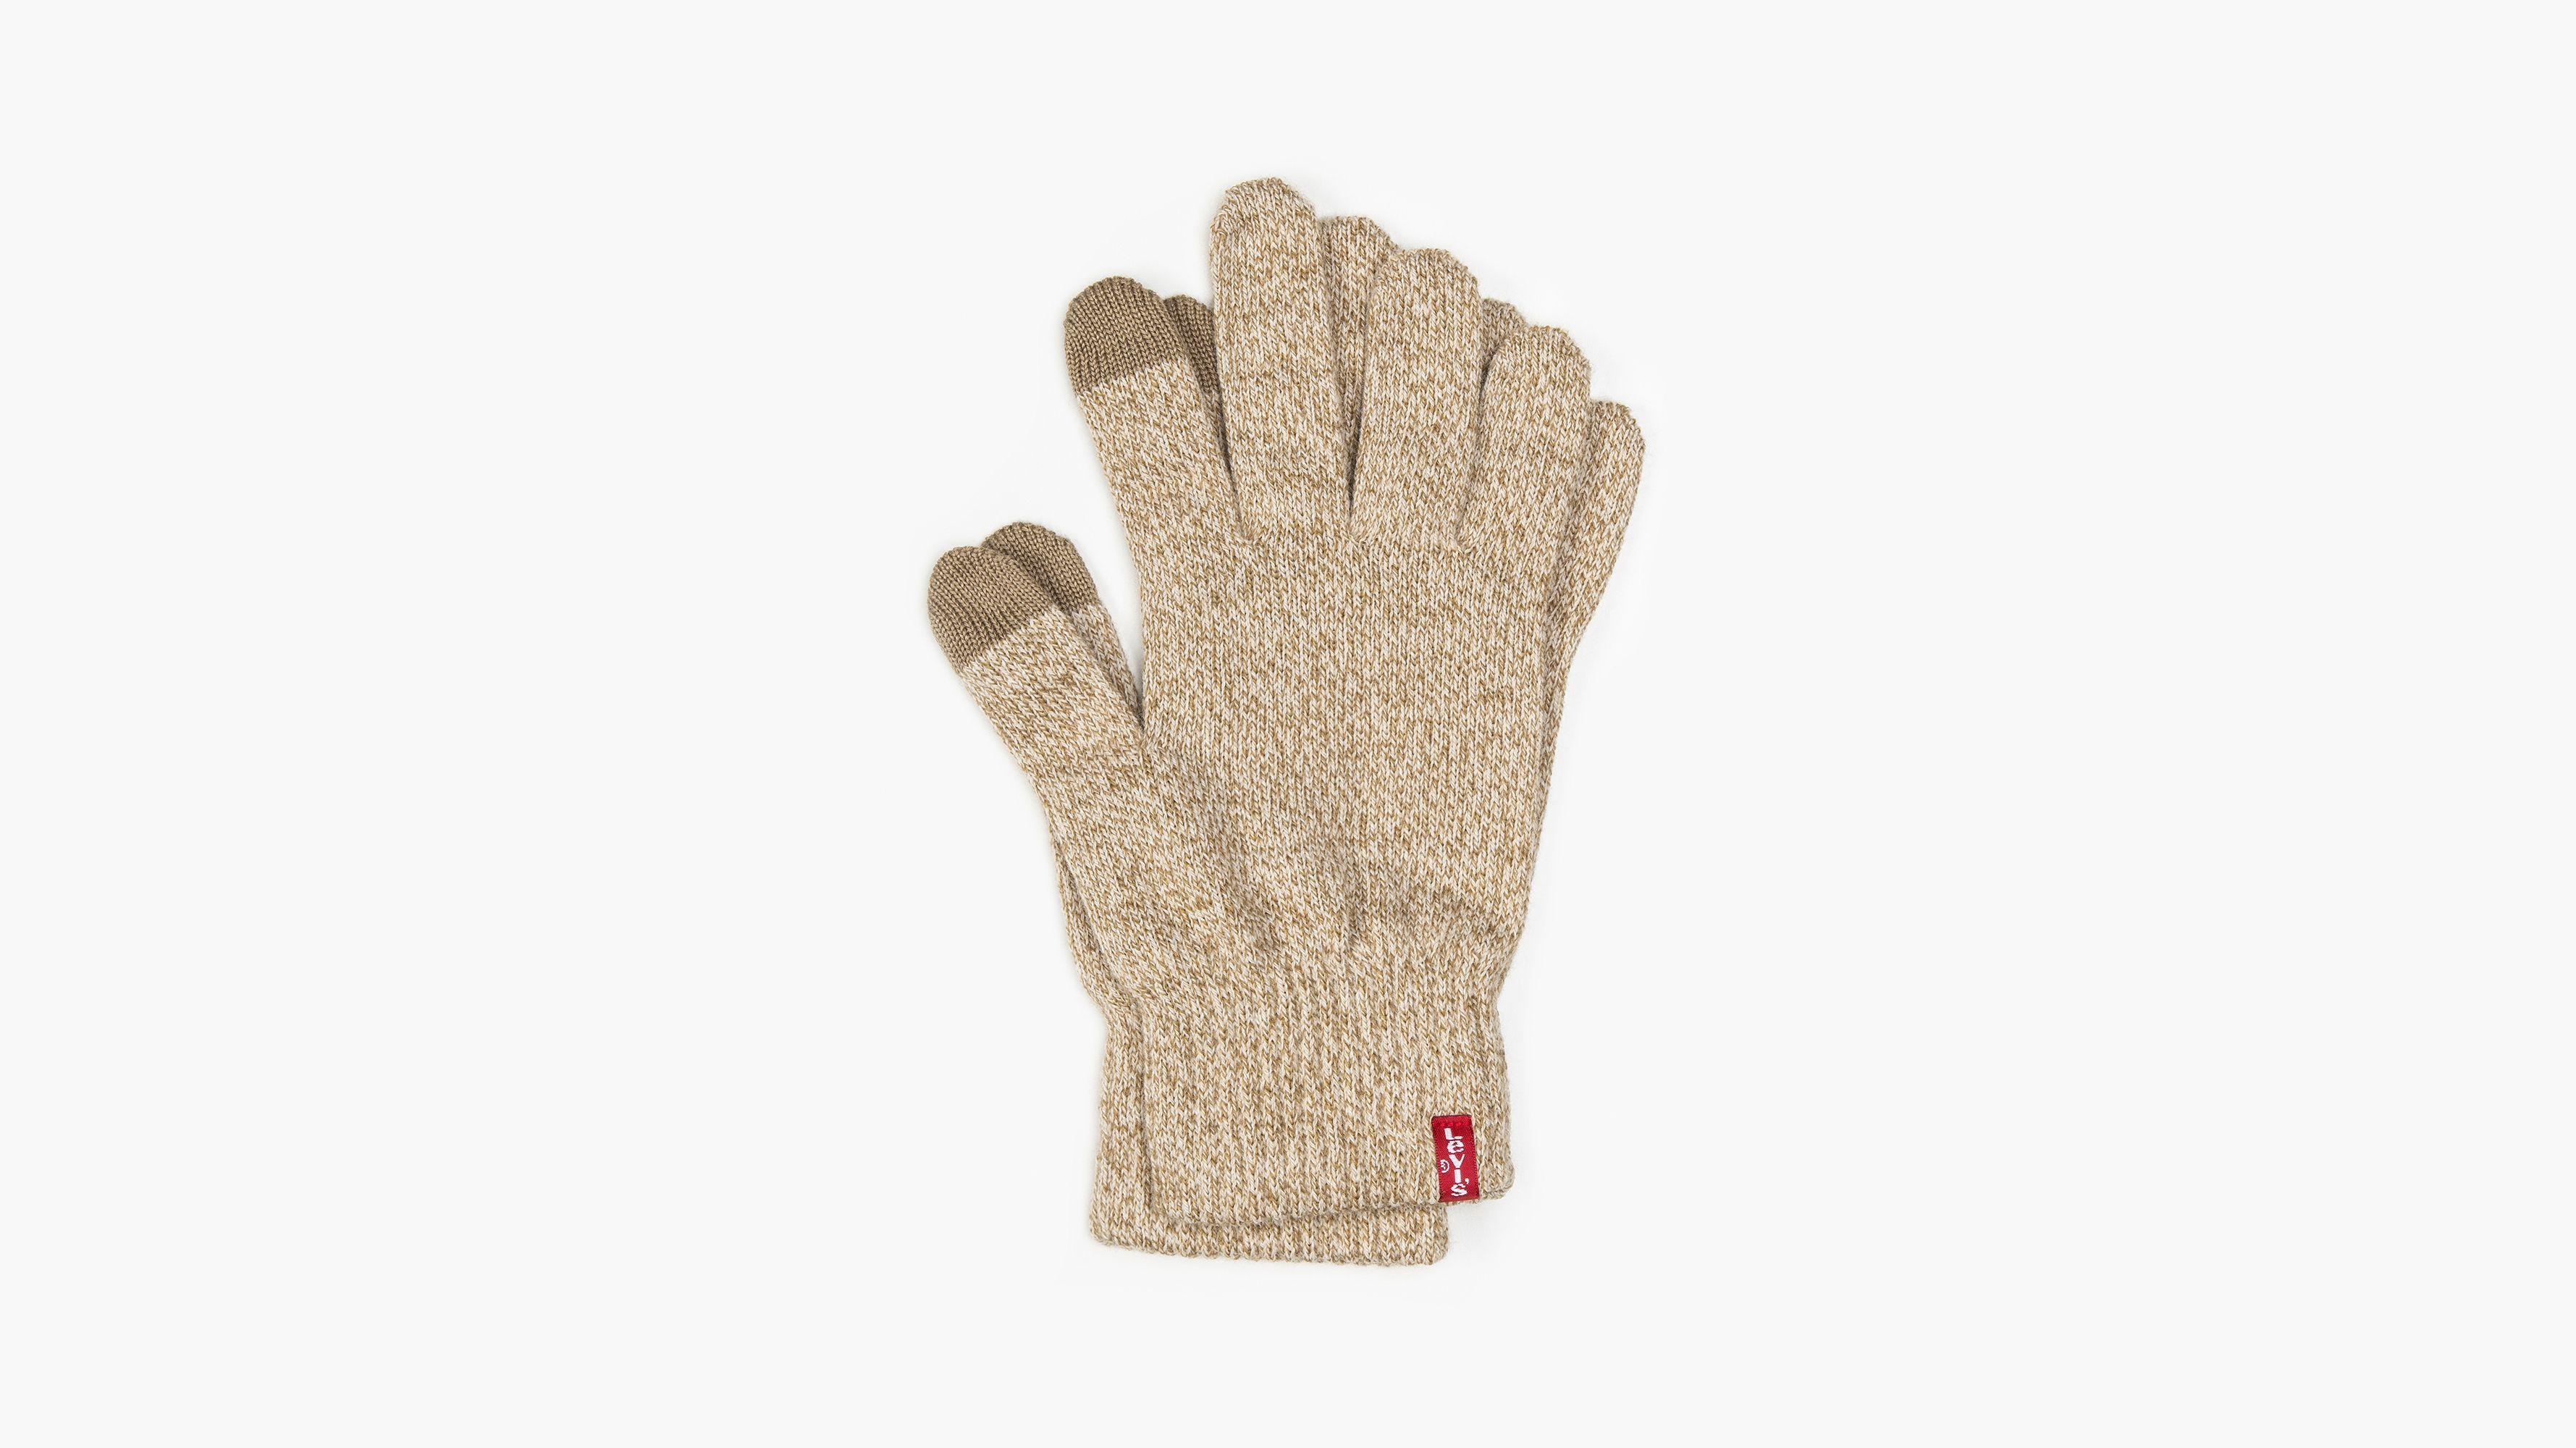 Gants Levi's Ben Touch Screen Gloves Regular Black